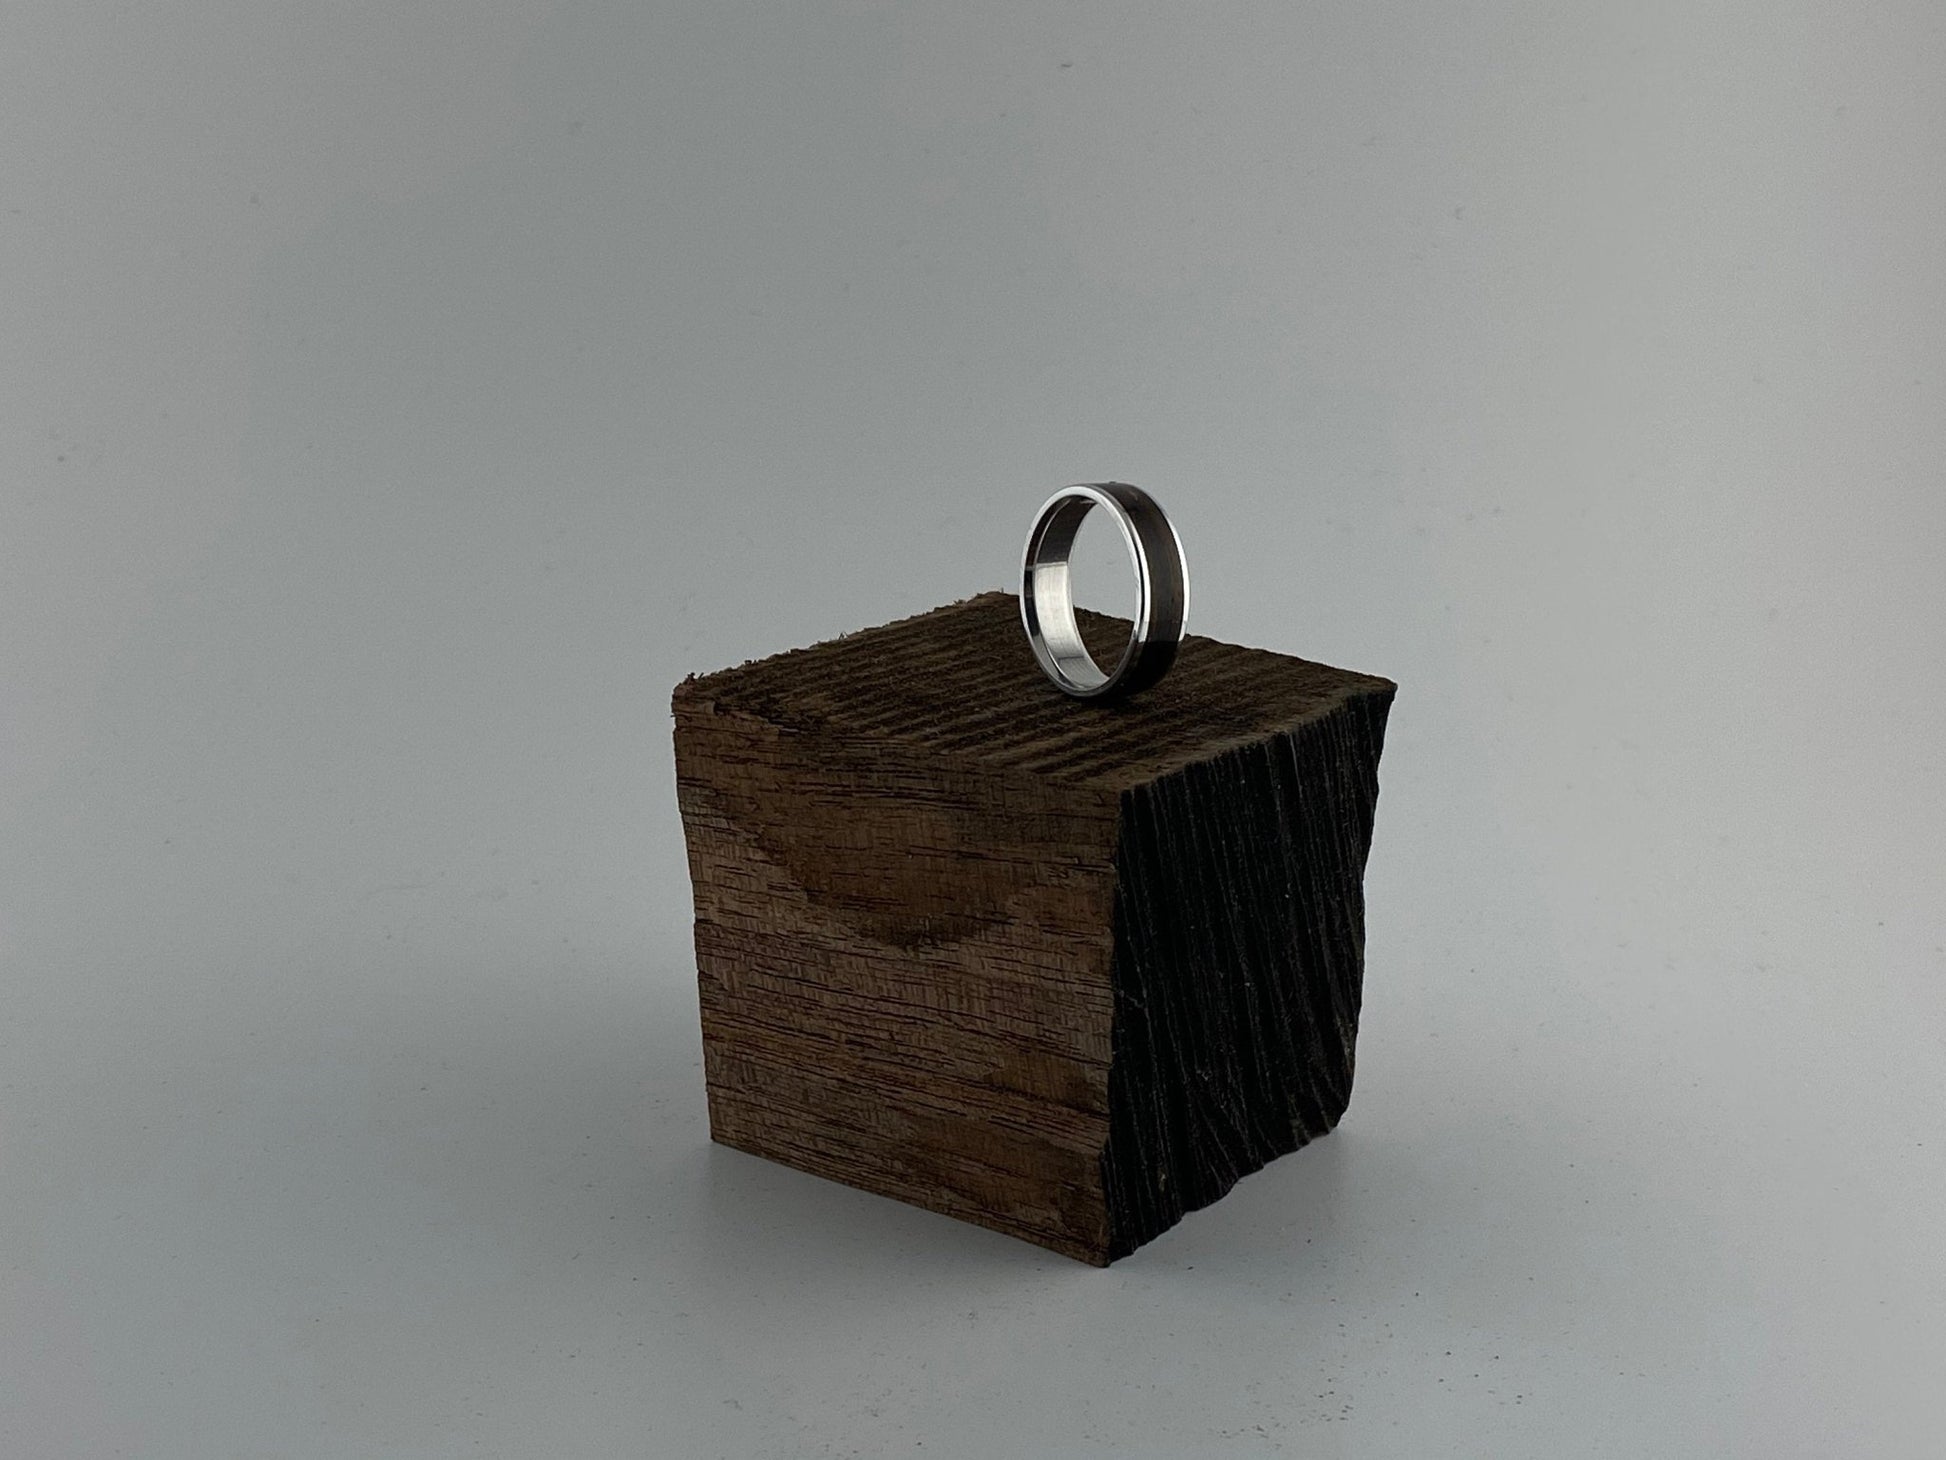 Aluminum Rose Wood Santos Ring - aluminum core - exotic wood ring - bentwood ring - Rude GrainJewelry